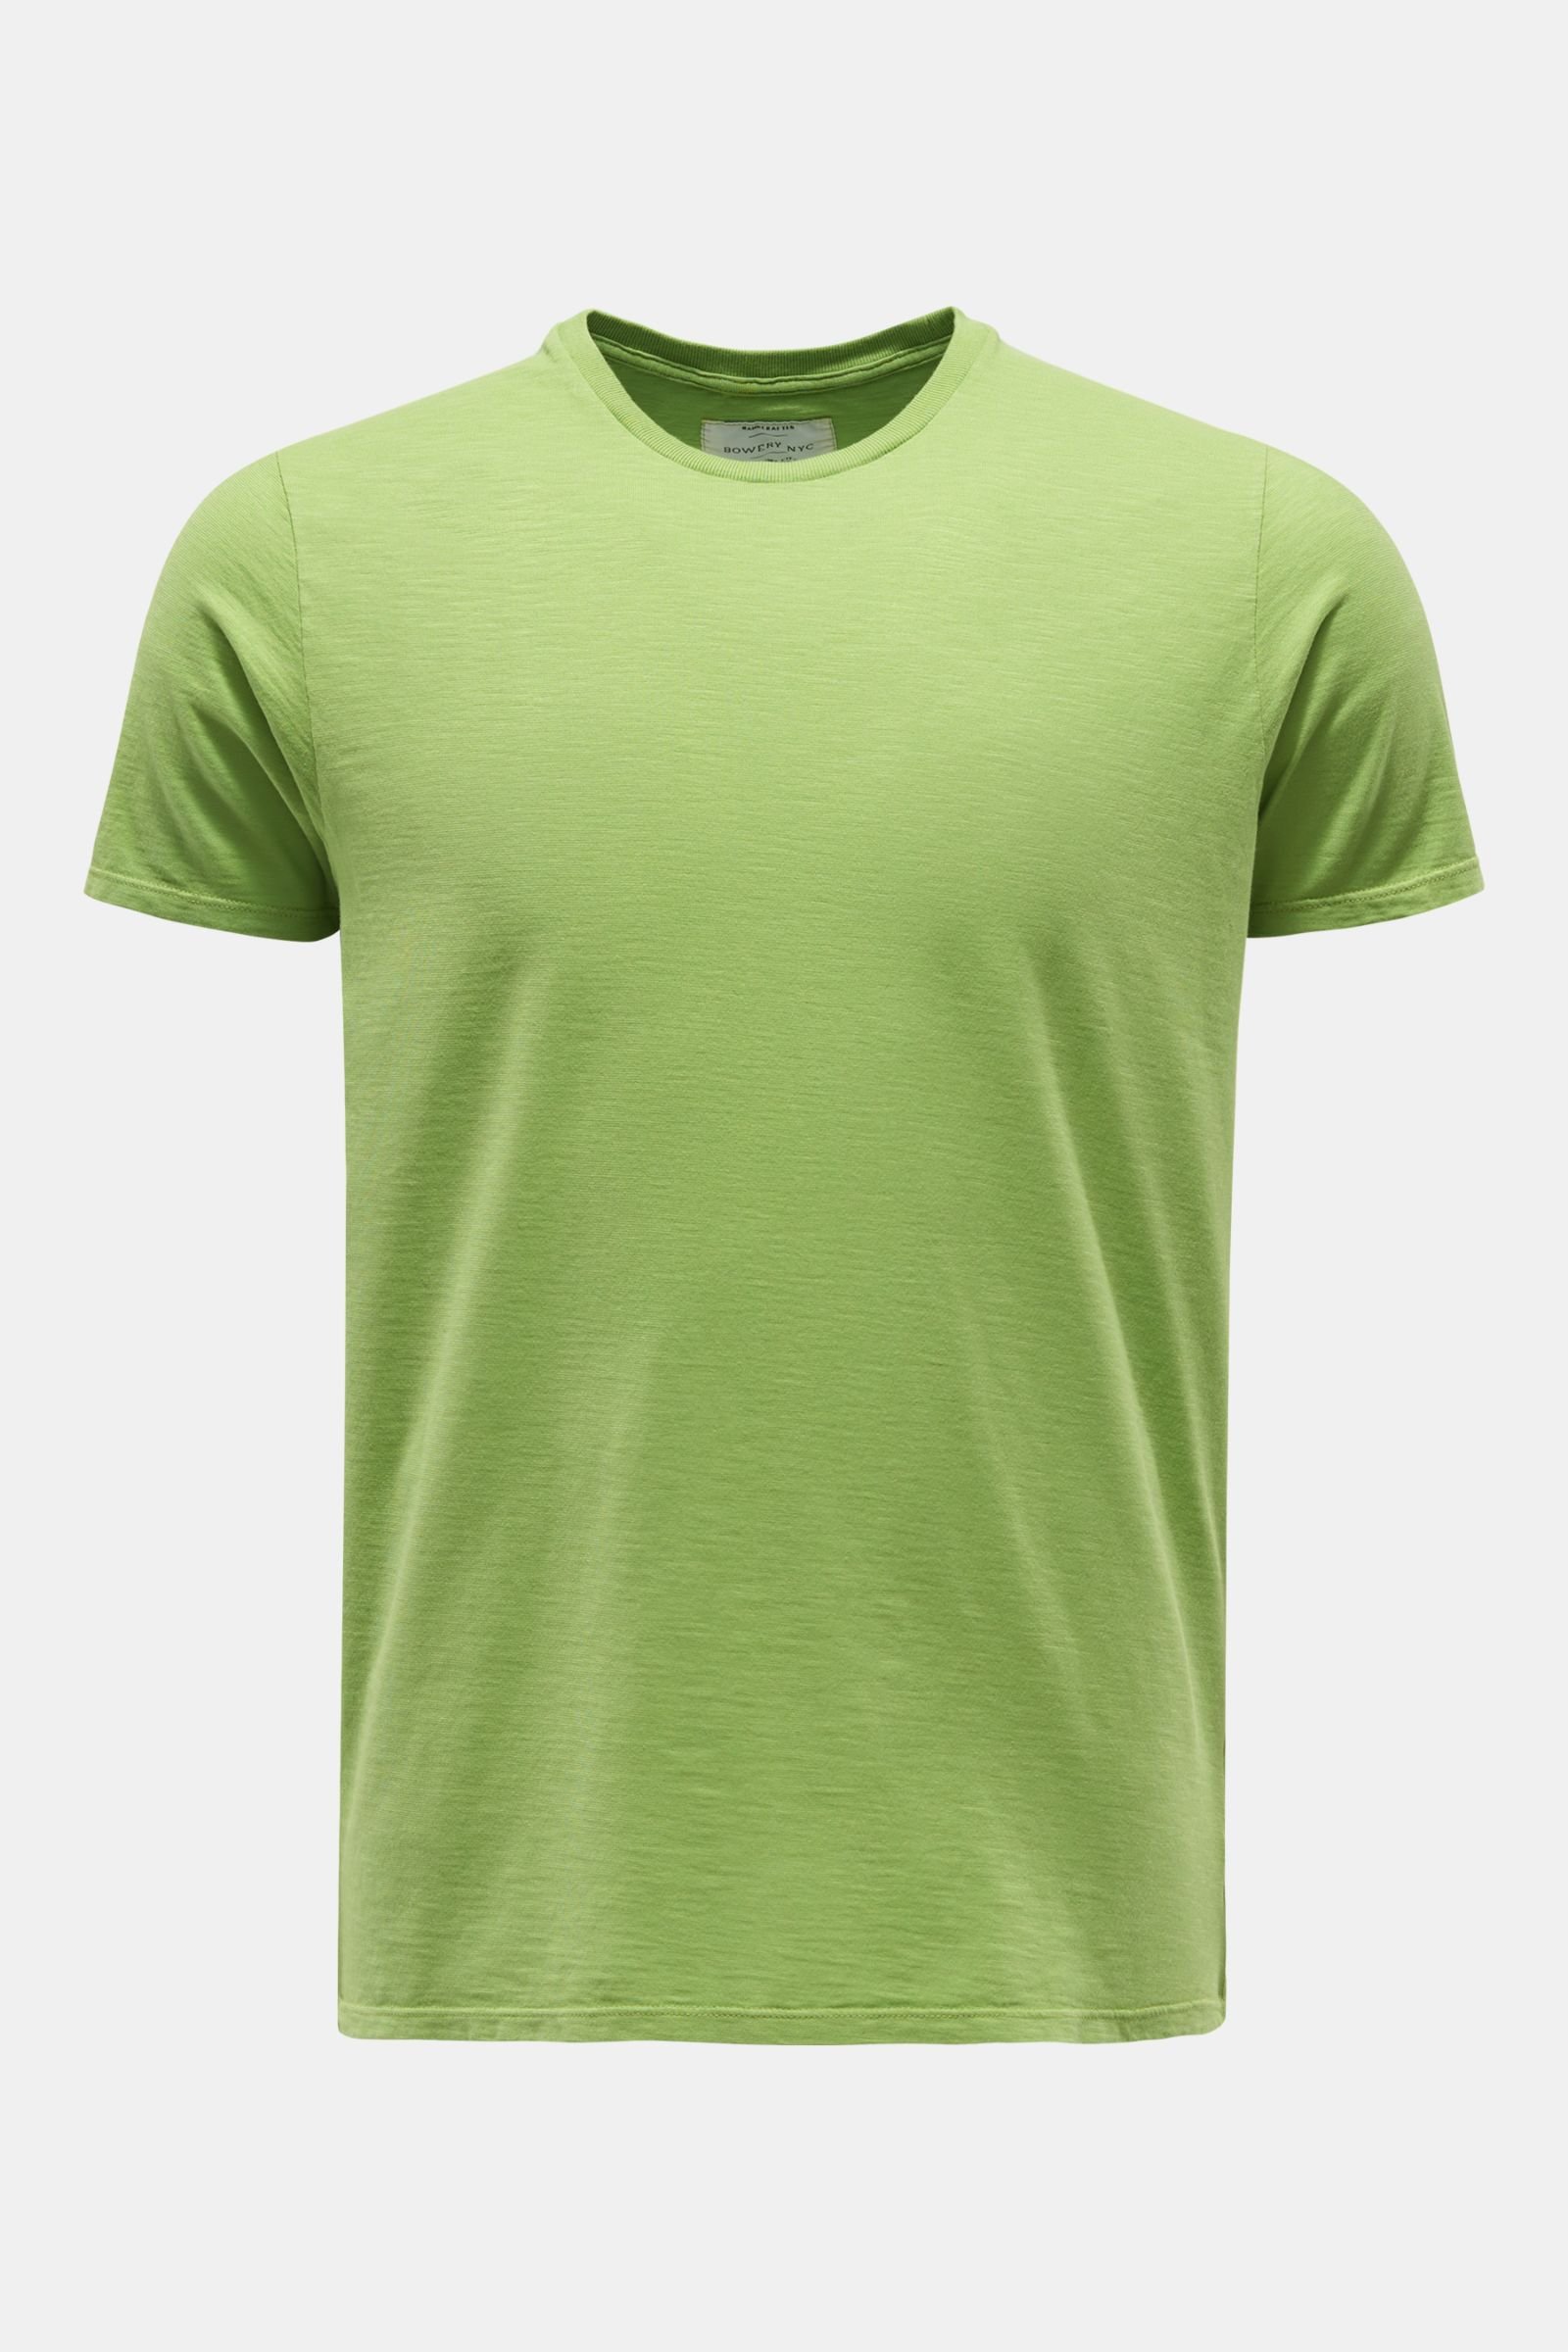 Rundhals-T-Shirt grün